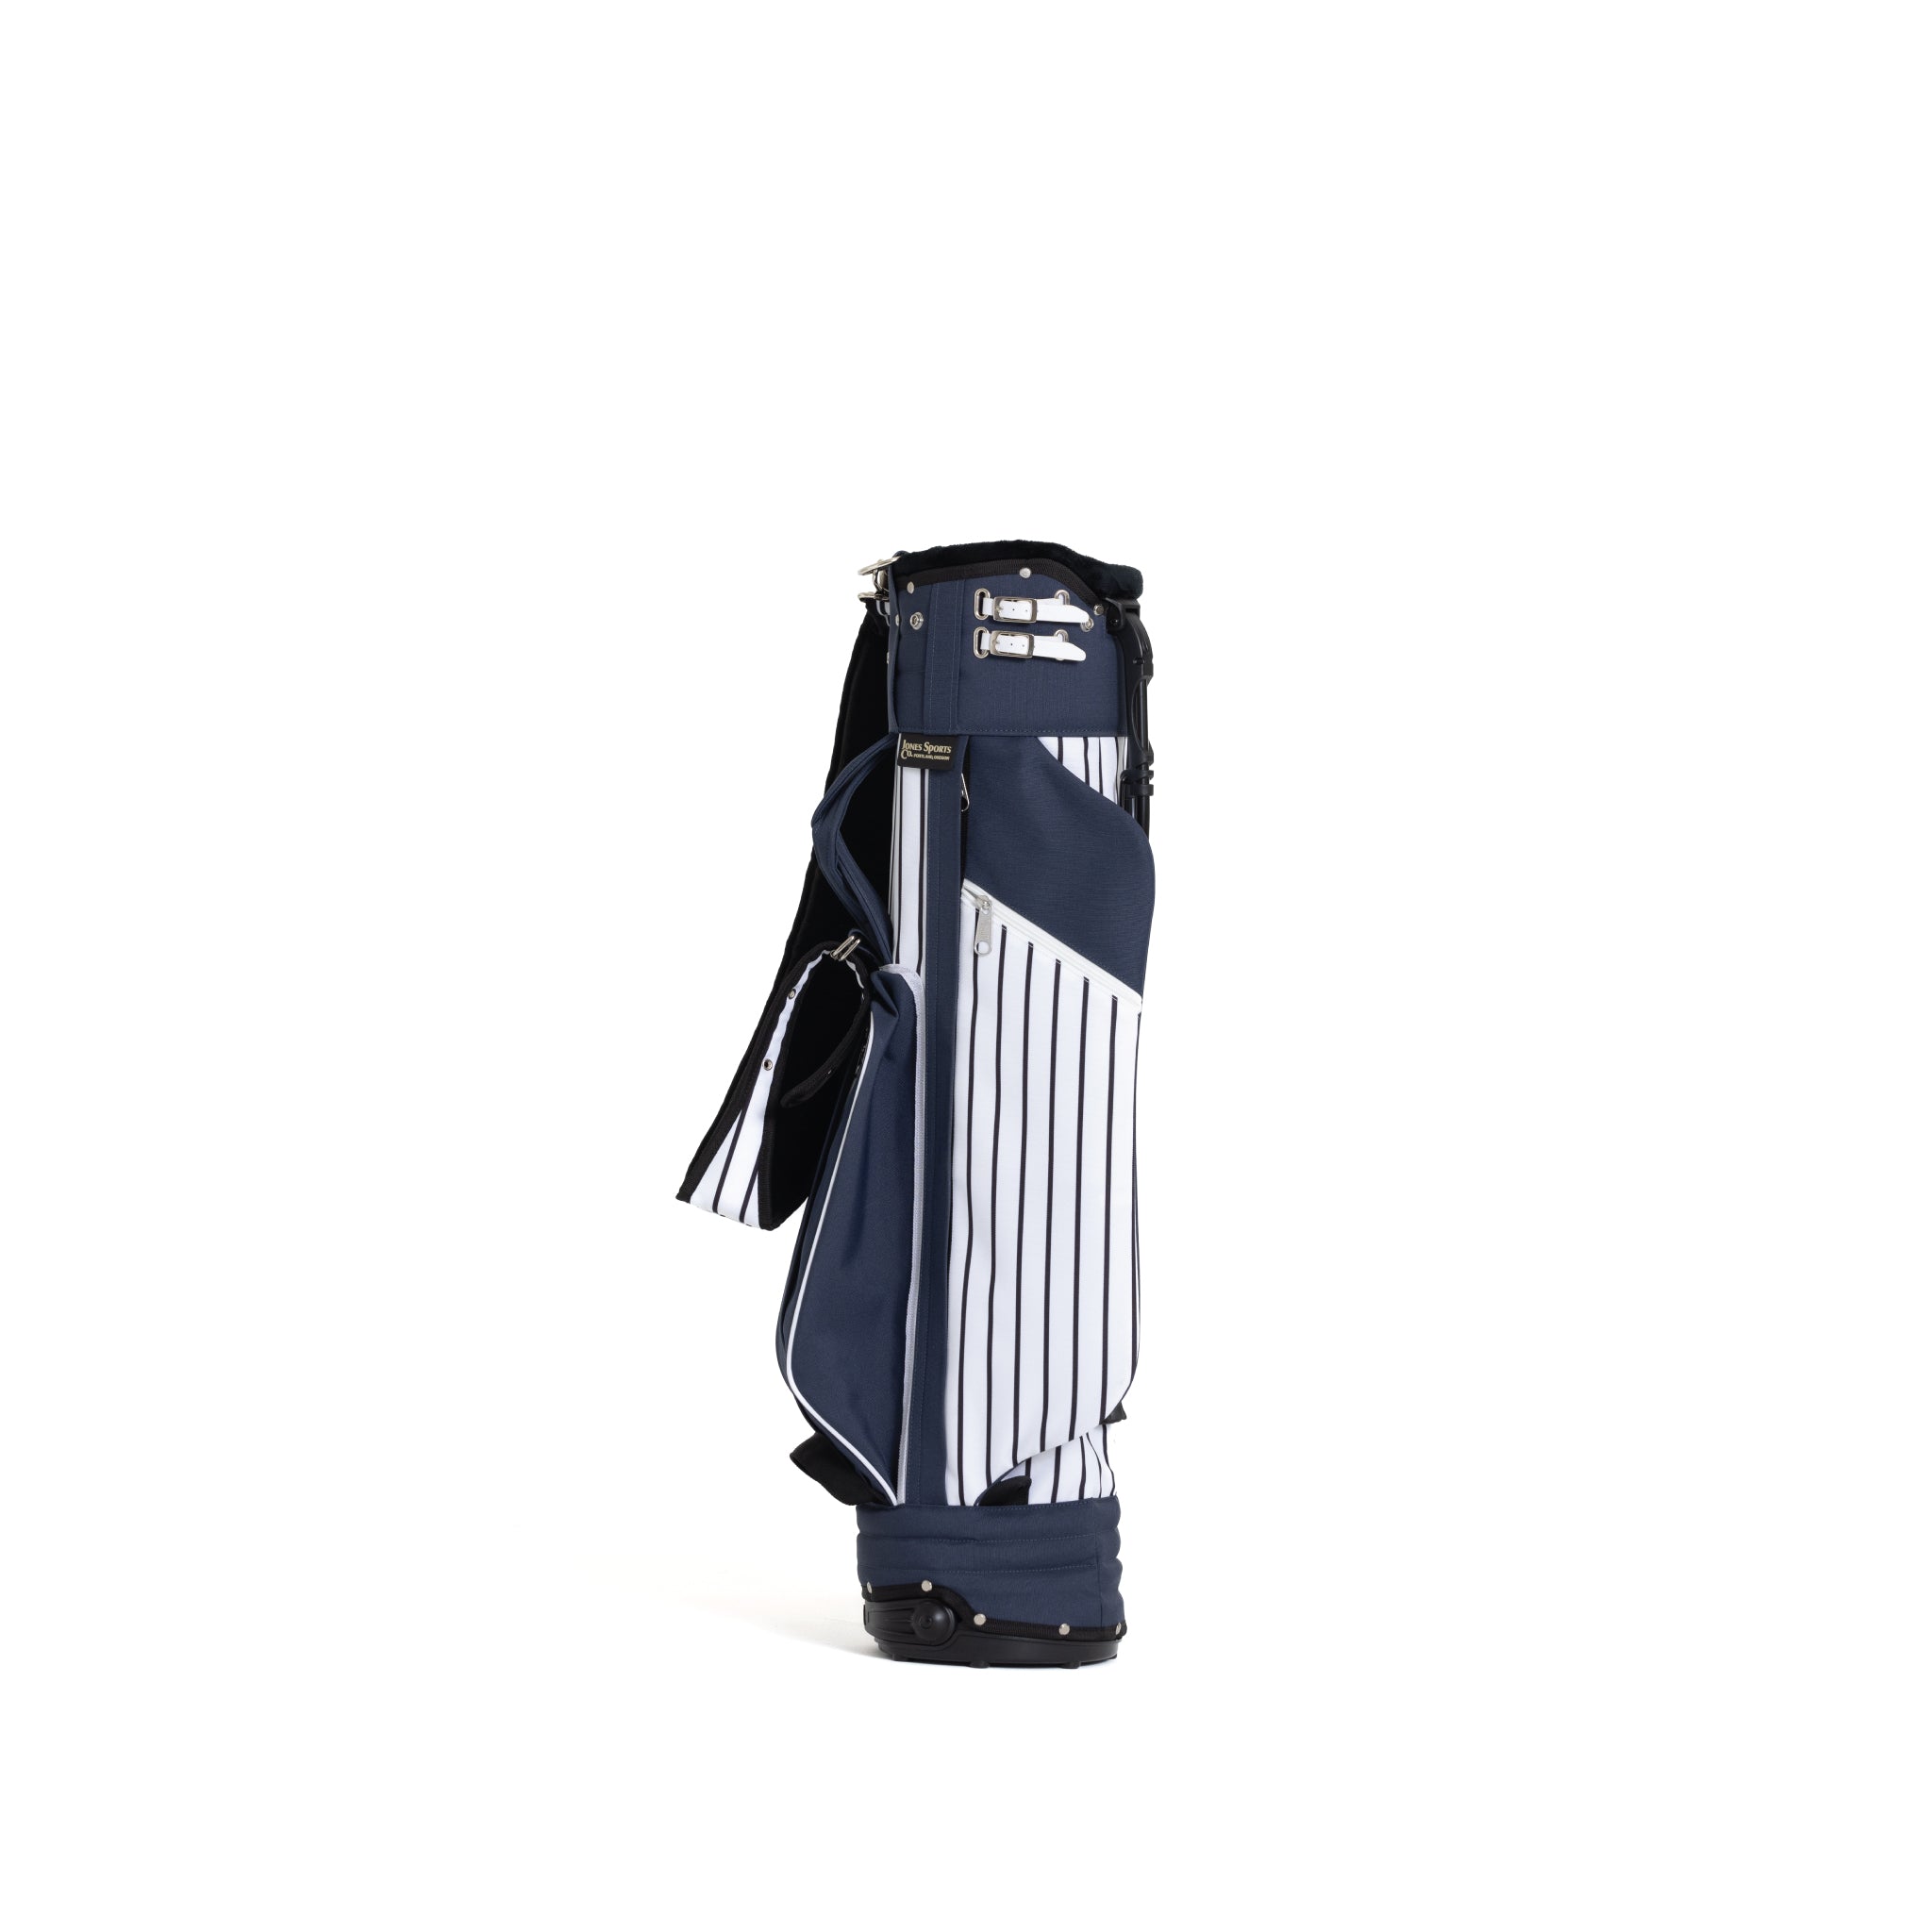 Jones Sports Co. Classic Stand Bag - Navy Pinstripe